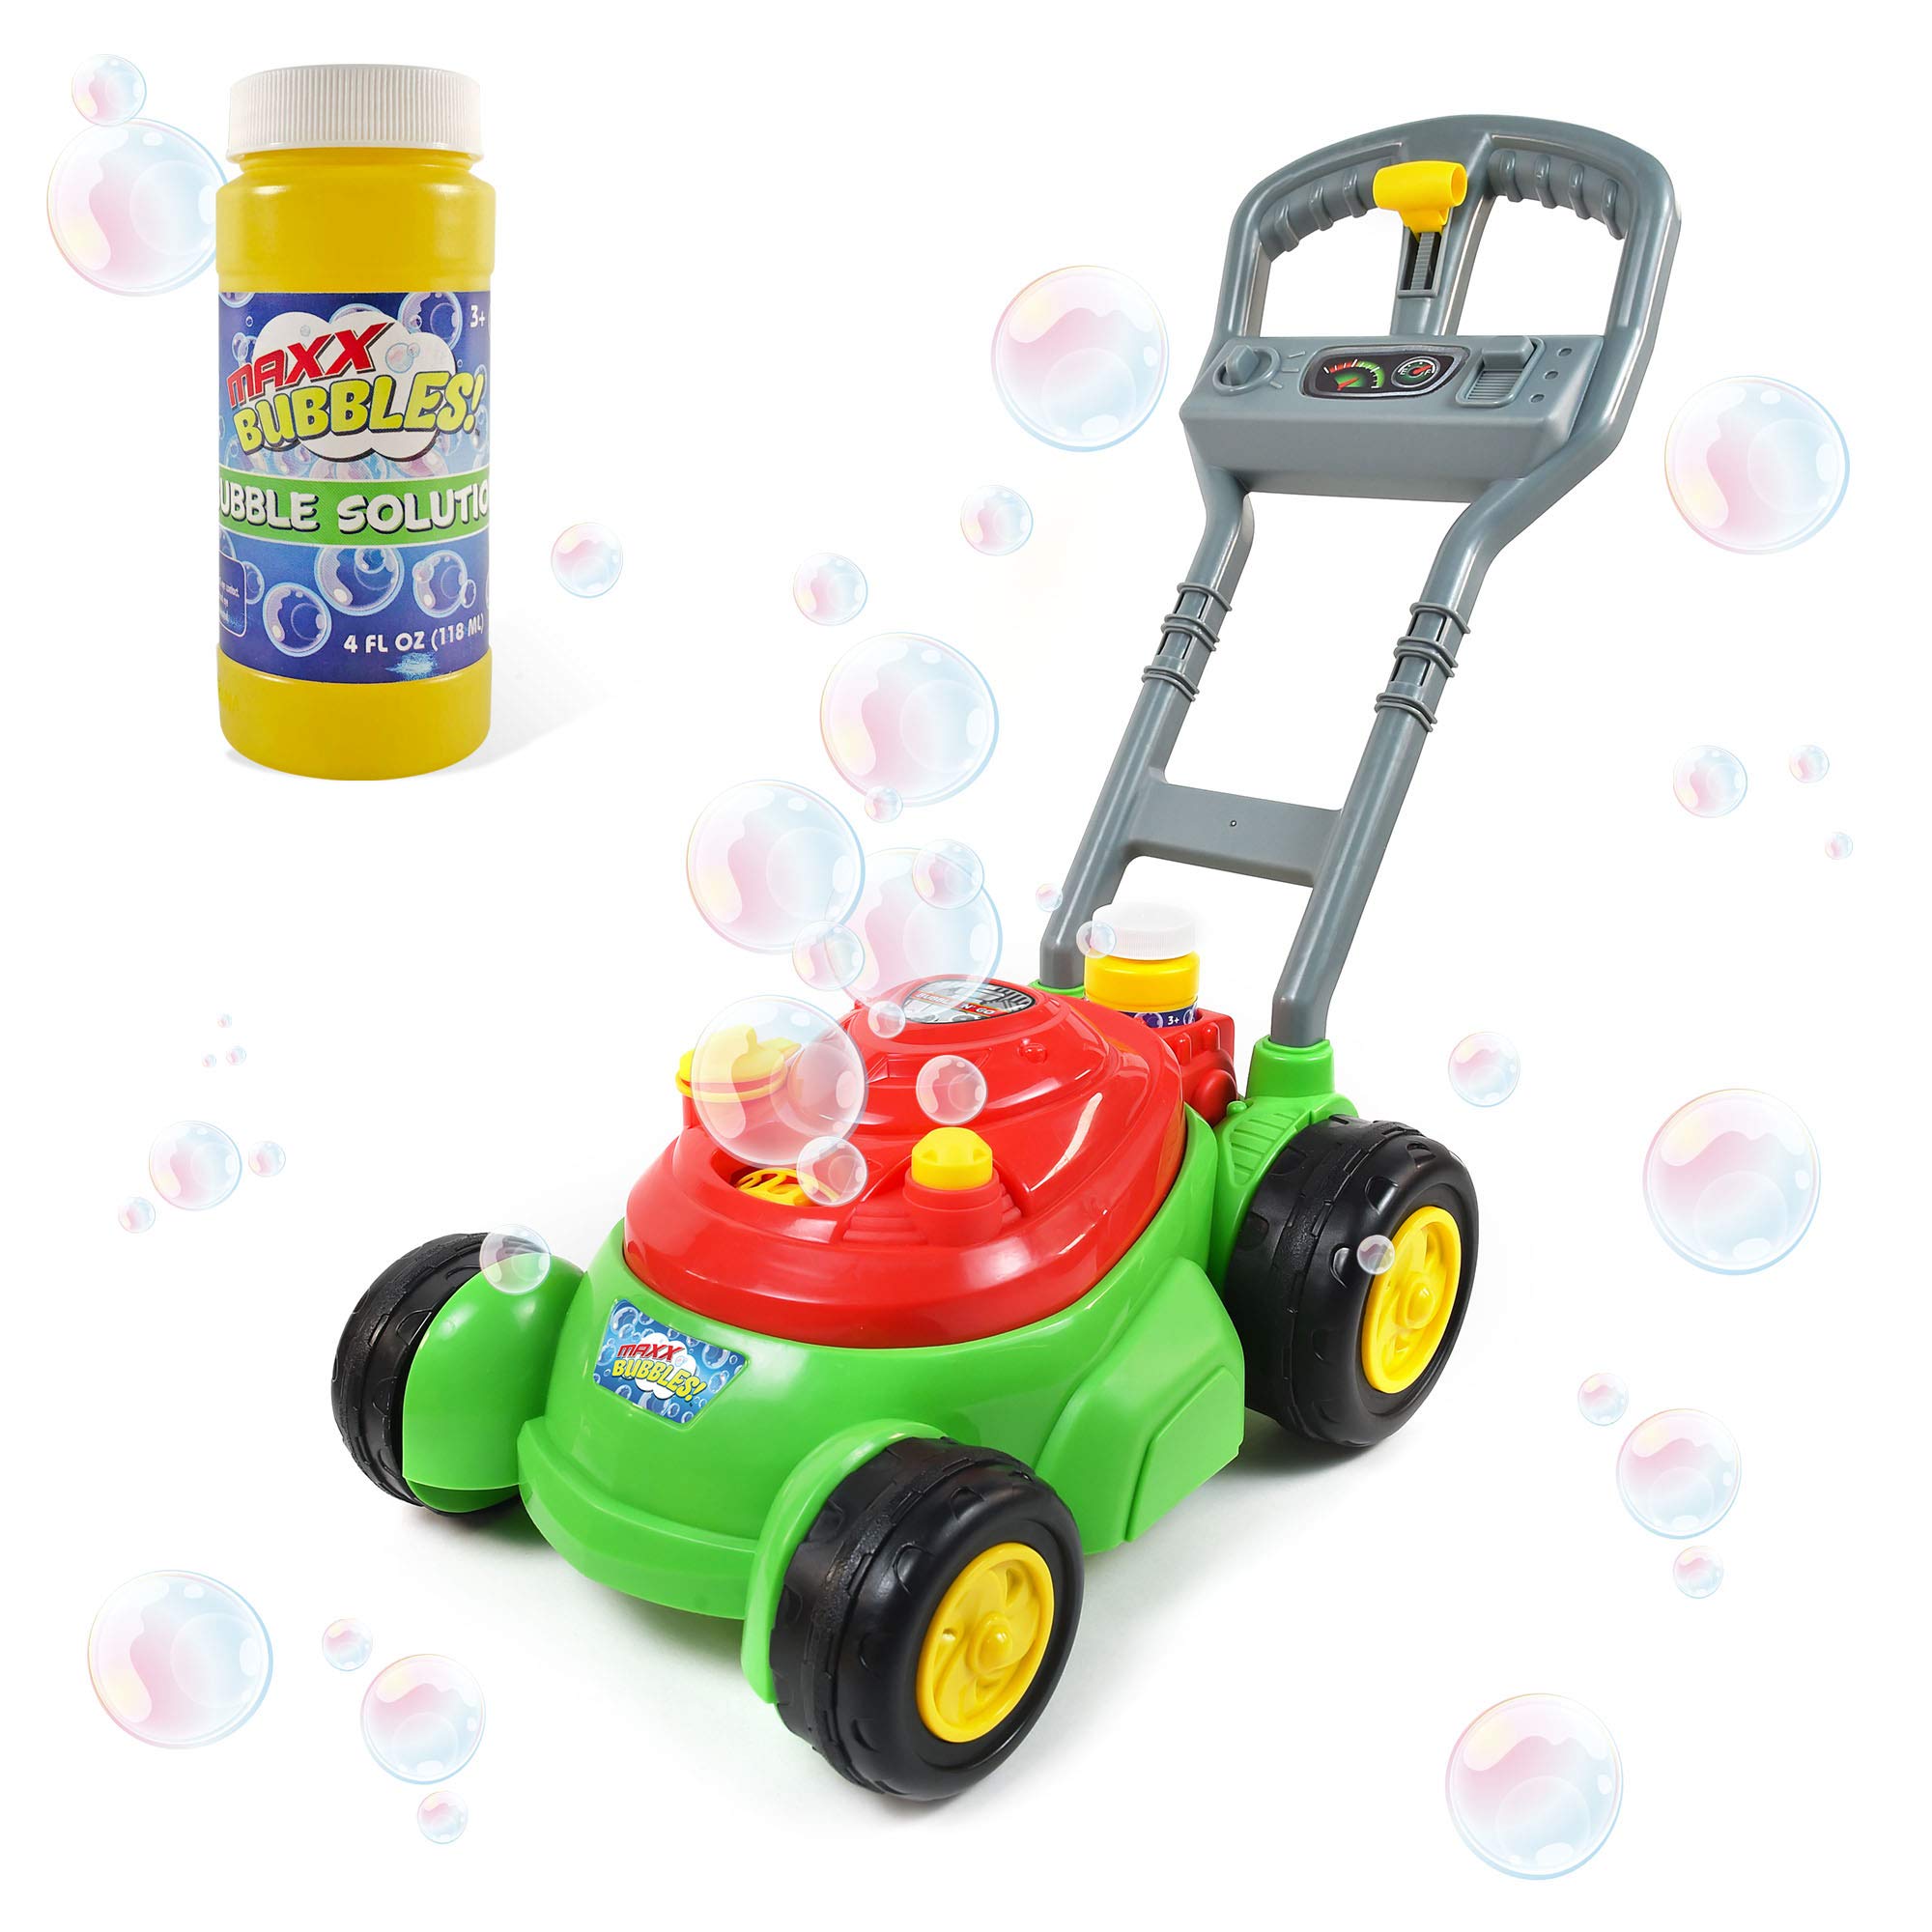 $9.99: Maxx Bubbles Deluxe Bubble Lawn Mower Toy w/ 4oz Bubble Solution